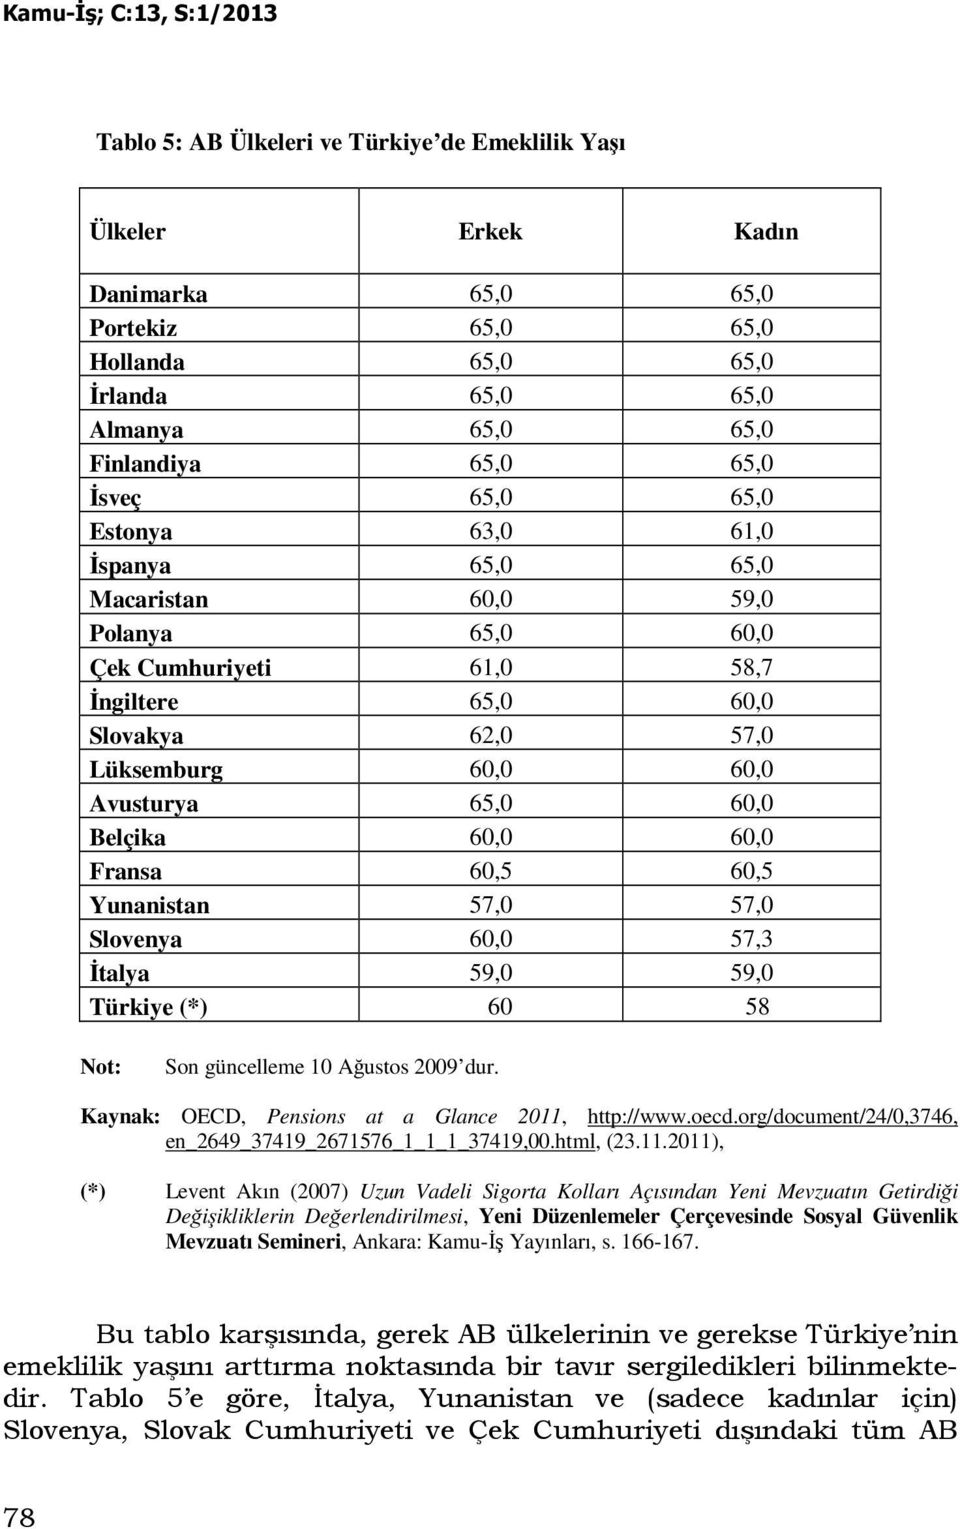 60,0 Fransa 60,5 60,5 Yunanistan 57,0 57,0 Slovenya 60,0 57,3 Đtalya 59,0 59,0 Türkiye (*) 60 58 Not: Son güncelleme 10 Ağustos 2009 dur. Kaynak: OECD, Pensions at a Glance 2011, http://www.oecd.